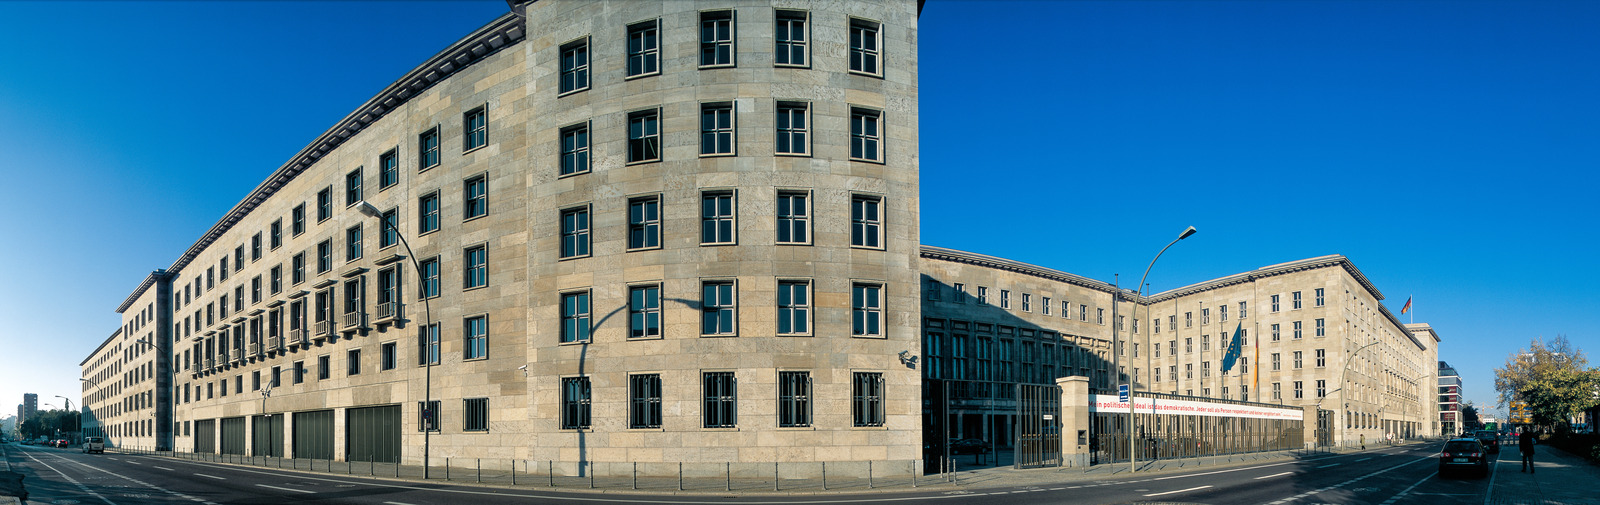 © Martin Frech: Detlev-Rohwedder-Haus (Bundesfinanzministerium), Berlin